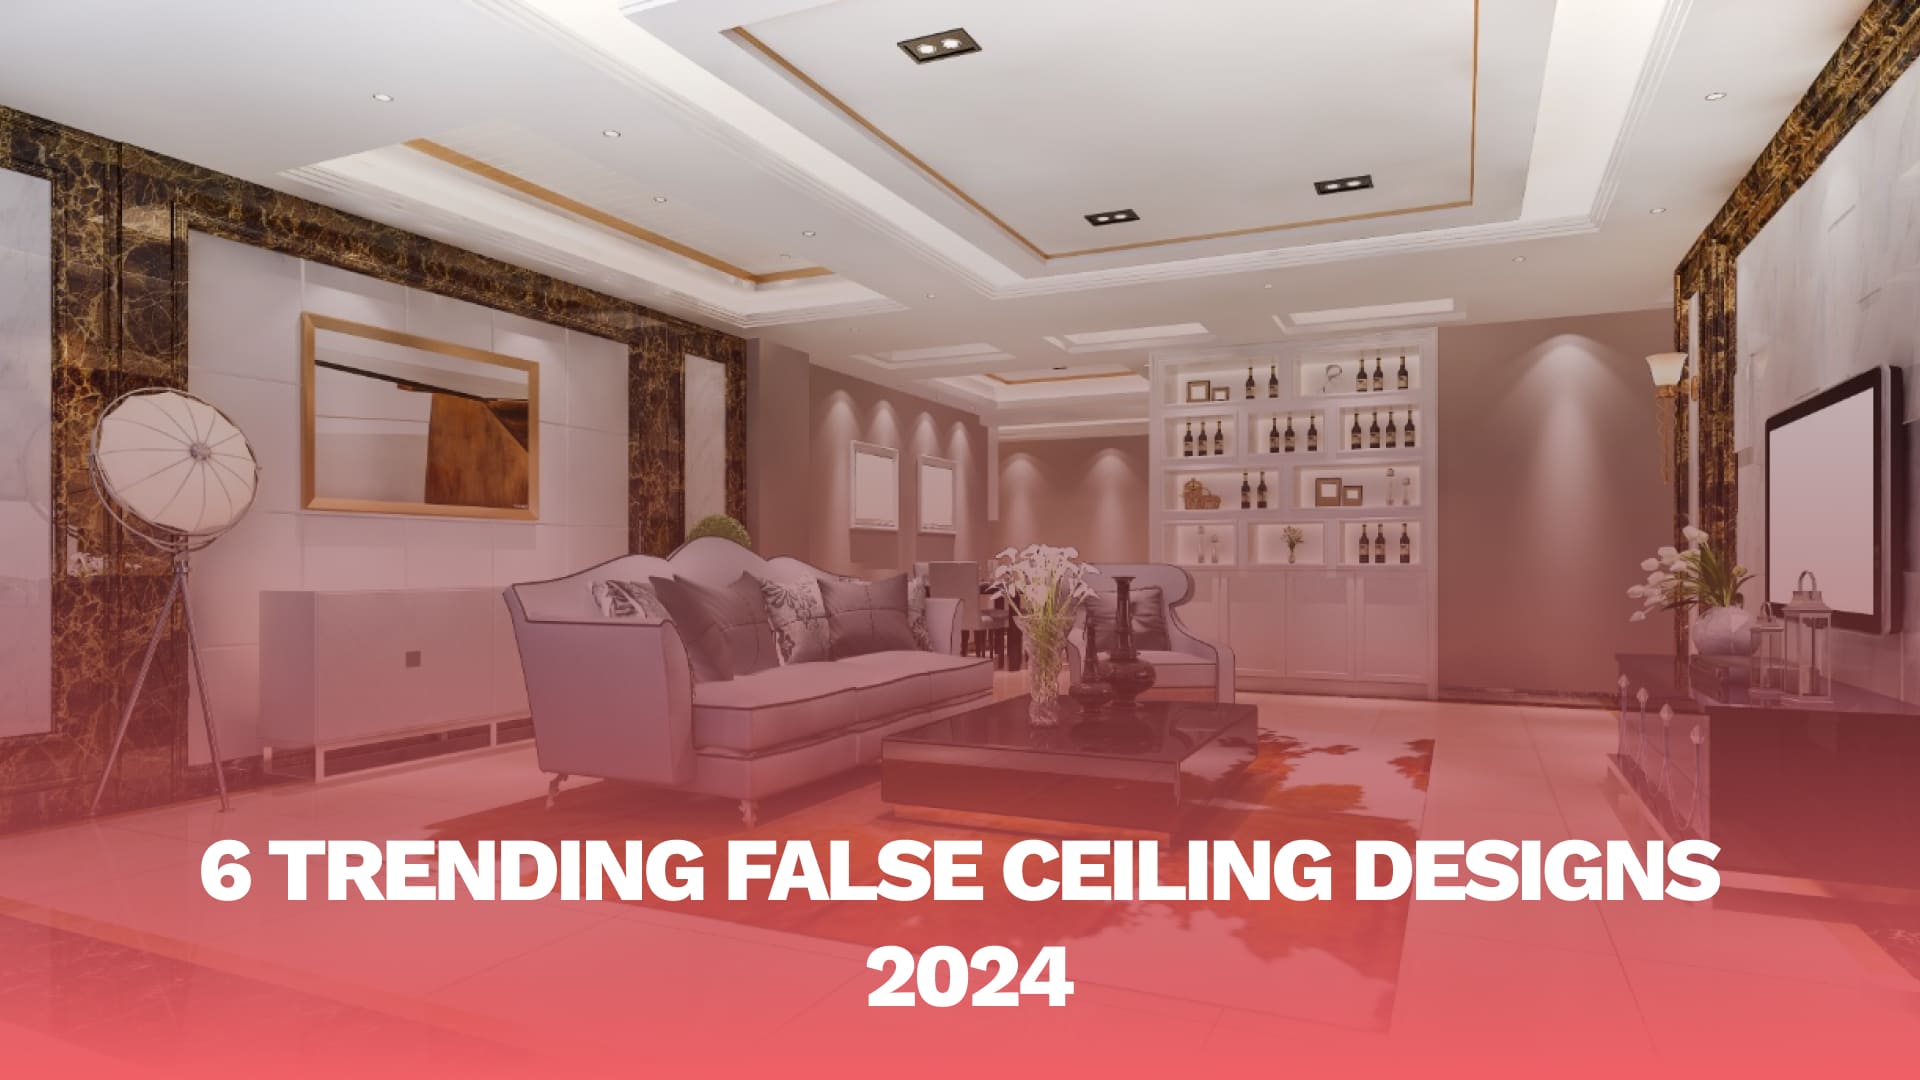 6 Trending False Ceiling Designs for Bedrooms - 2024